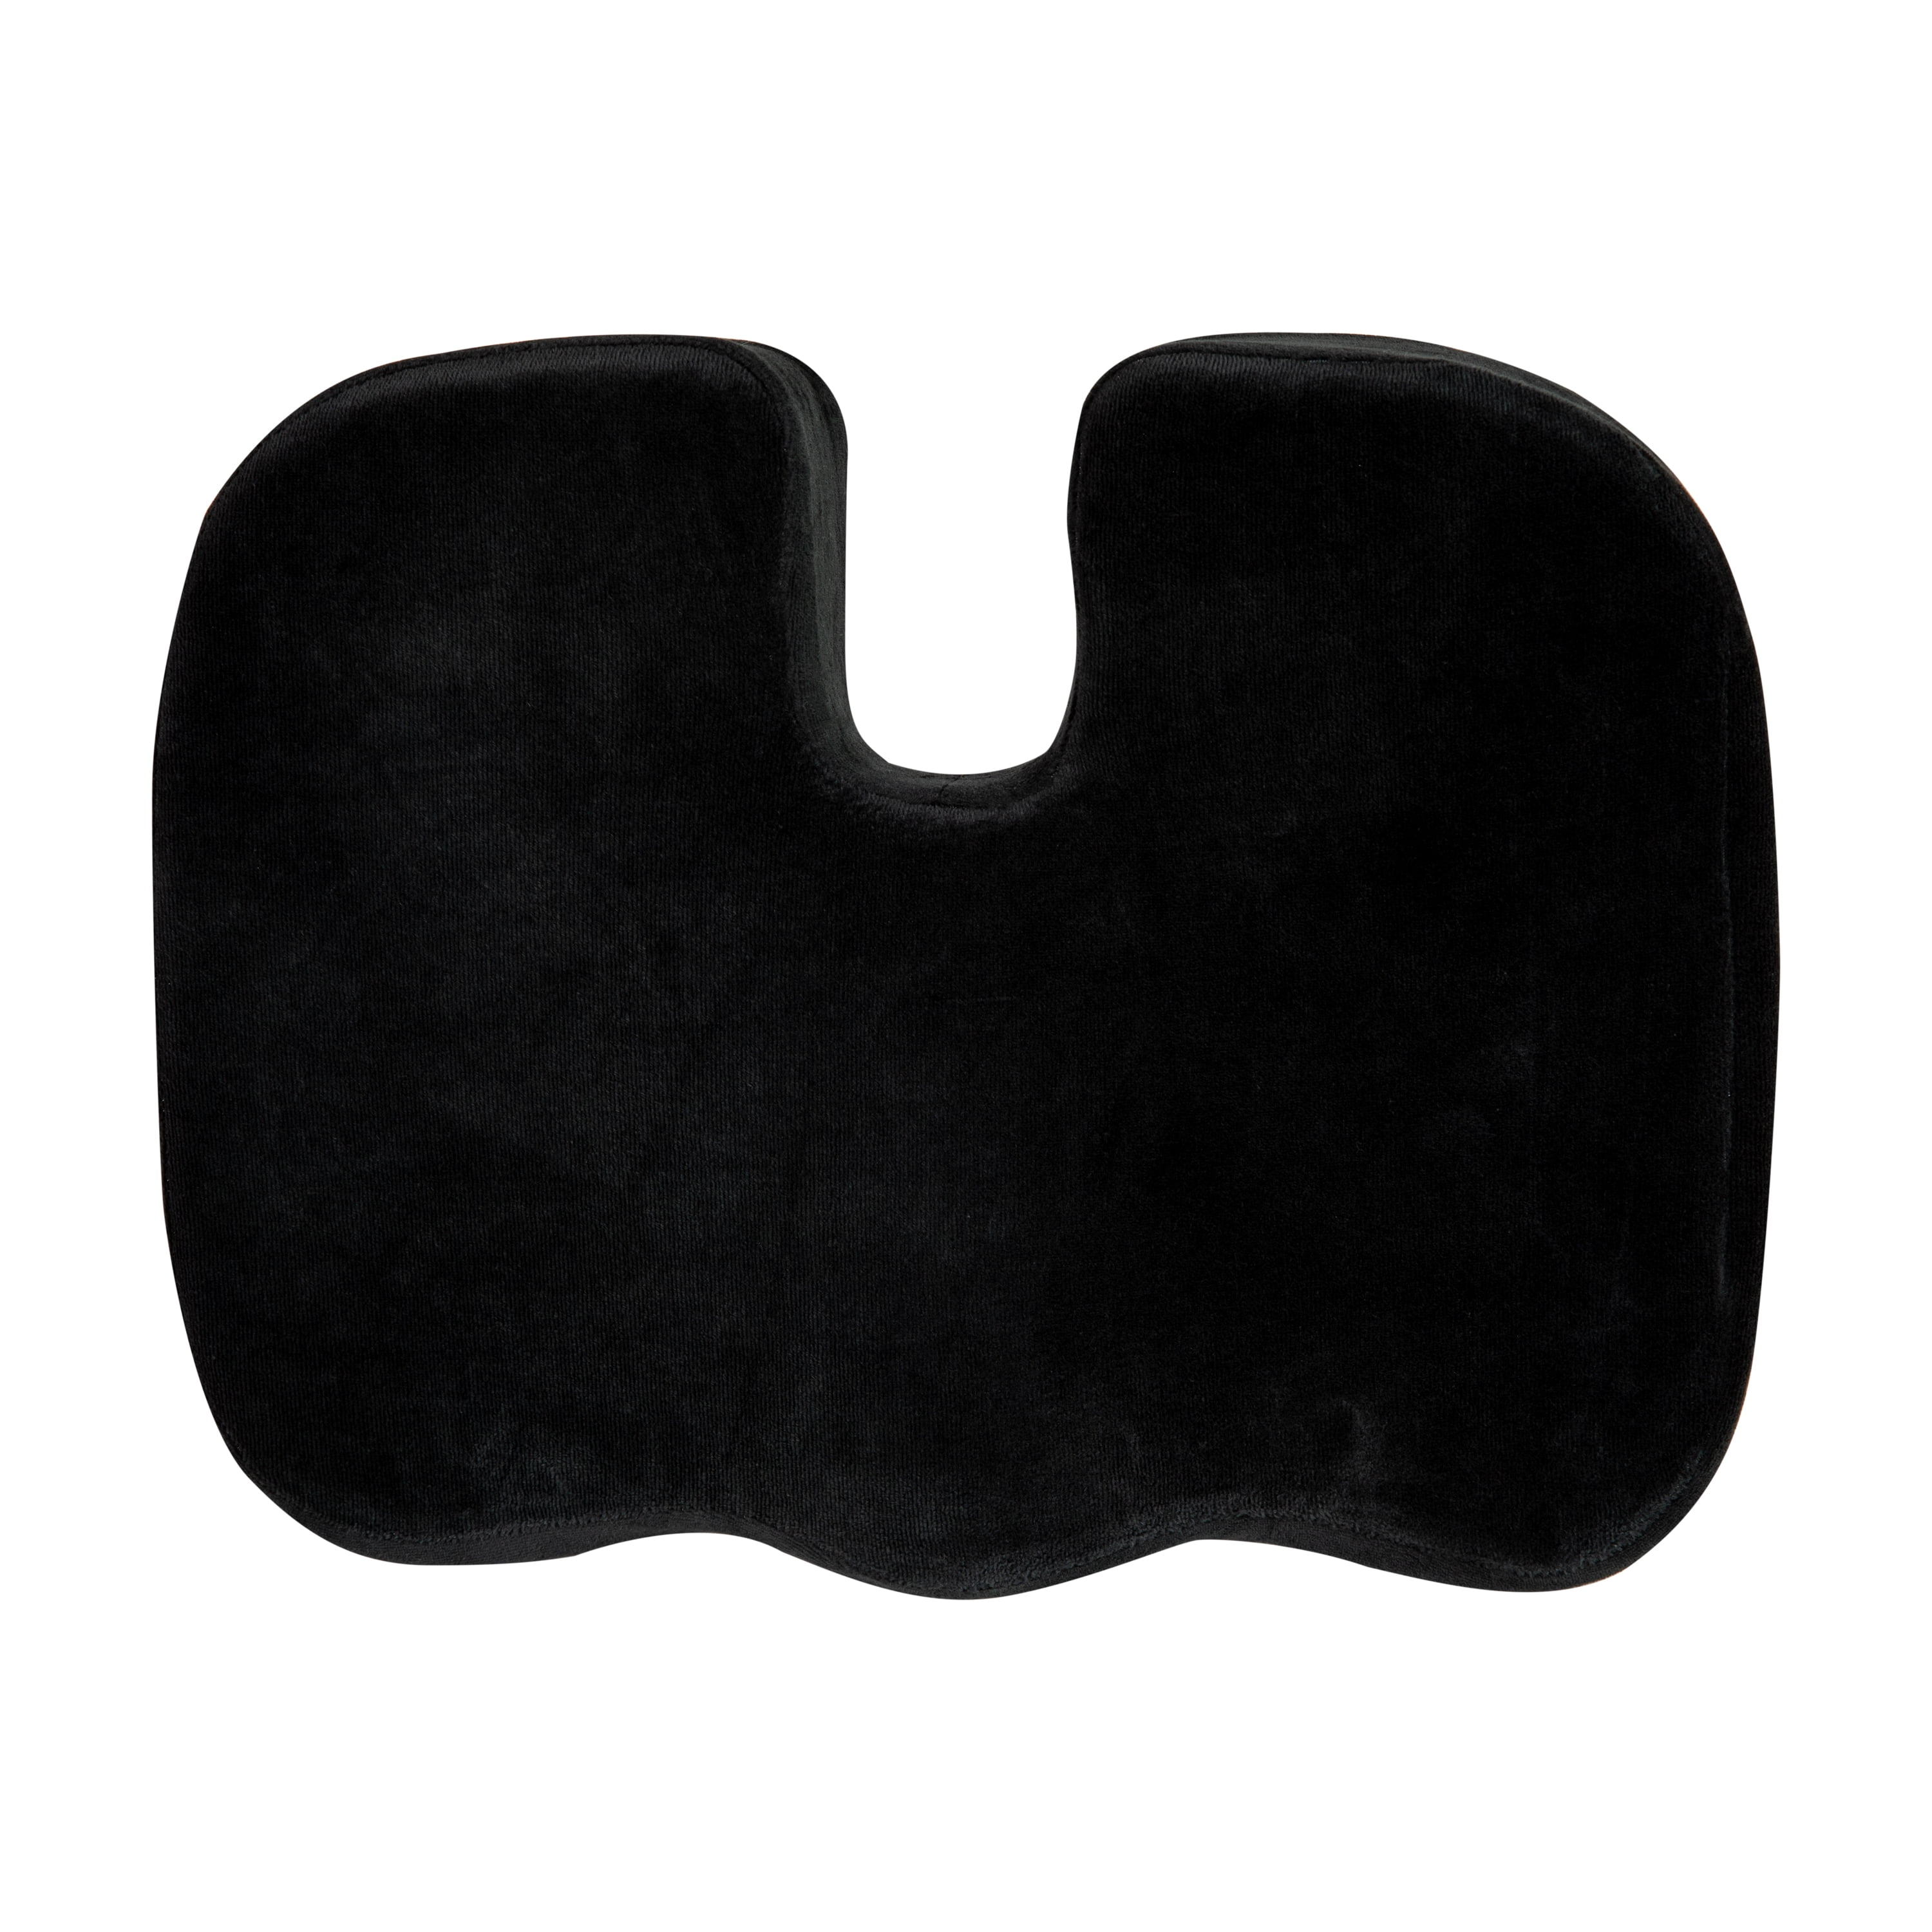 Simoniz Memory Foam Seat Cushion, Black